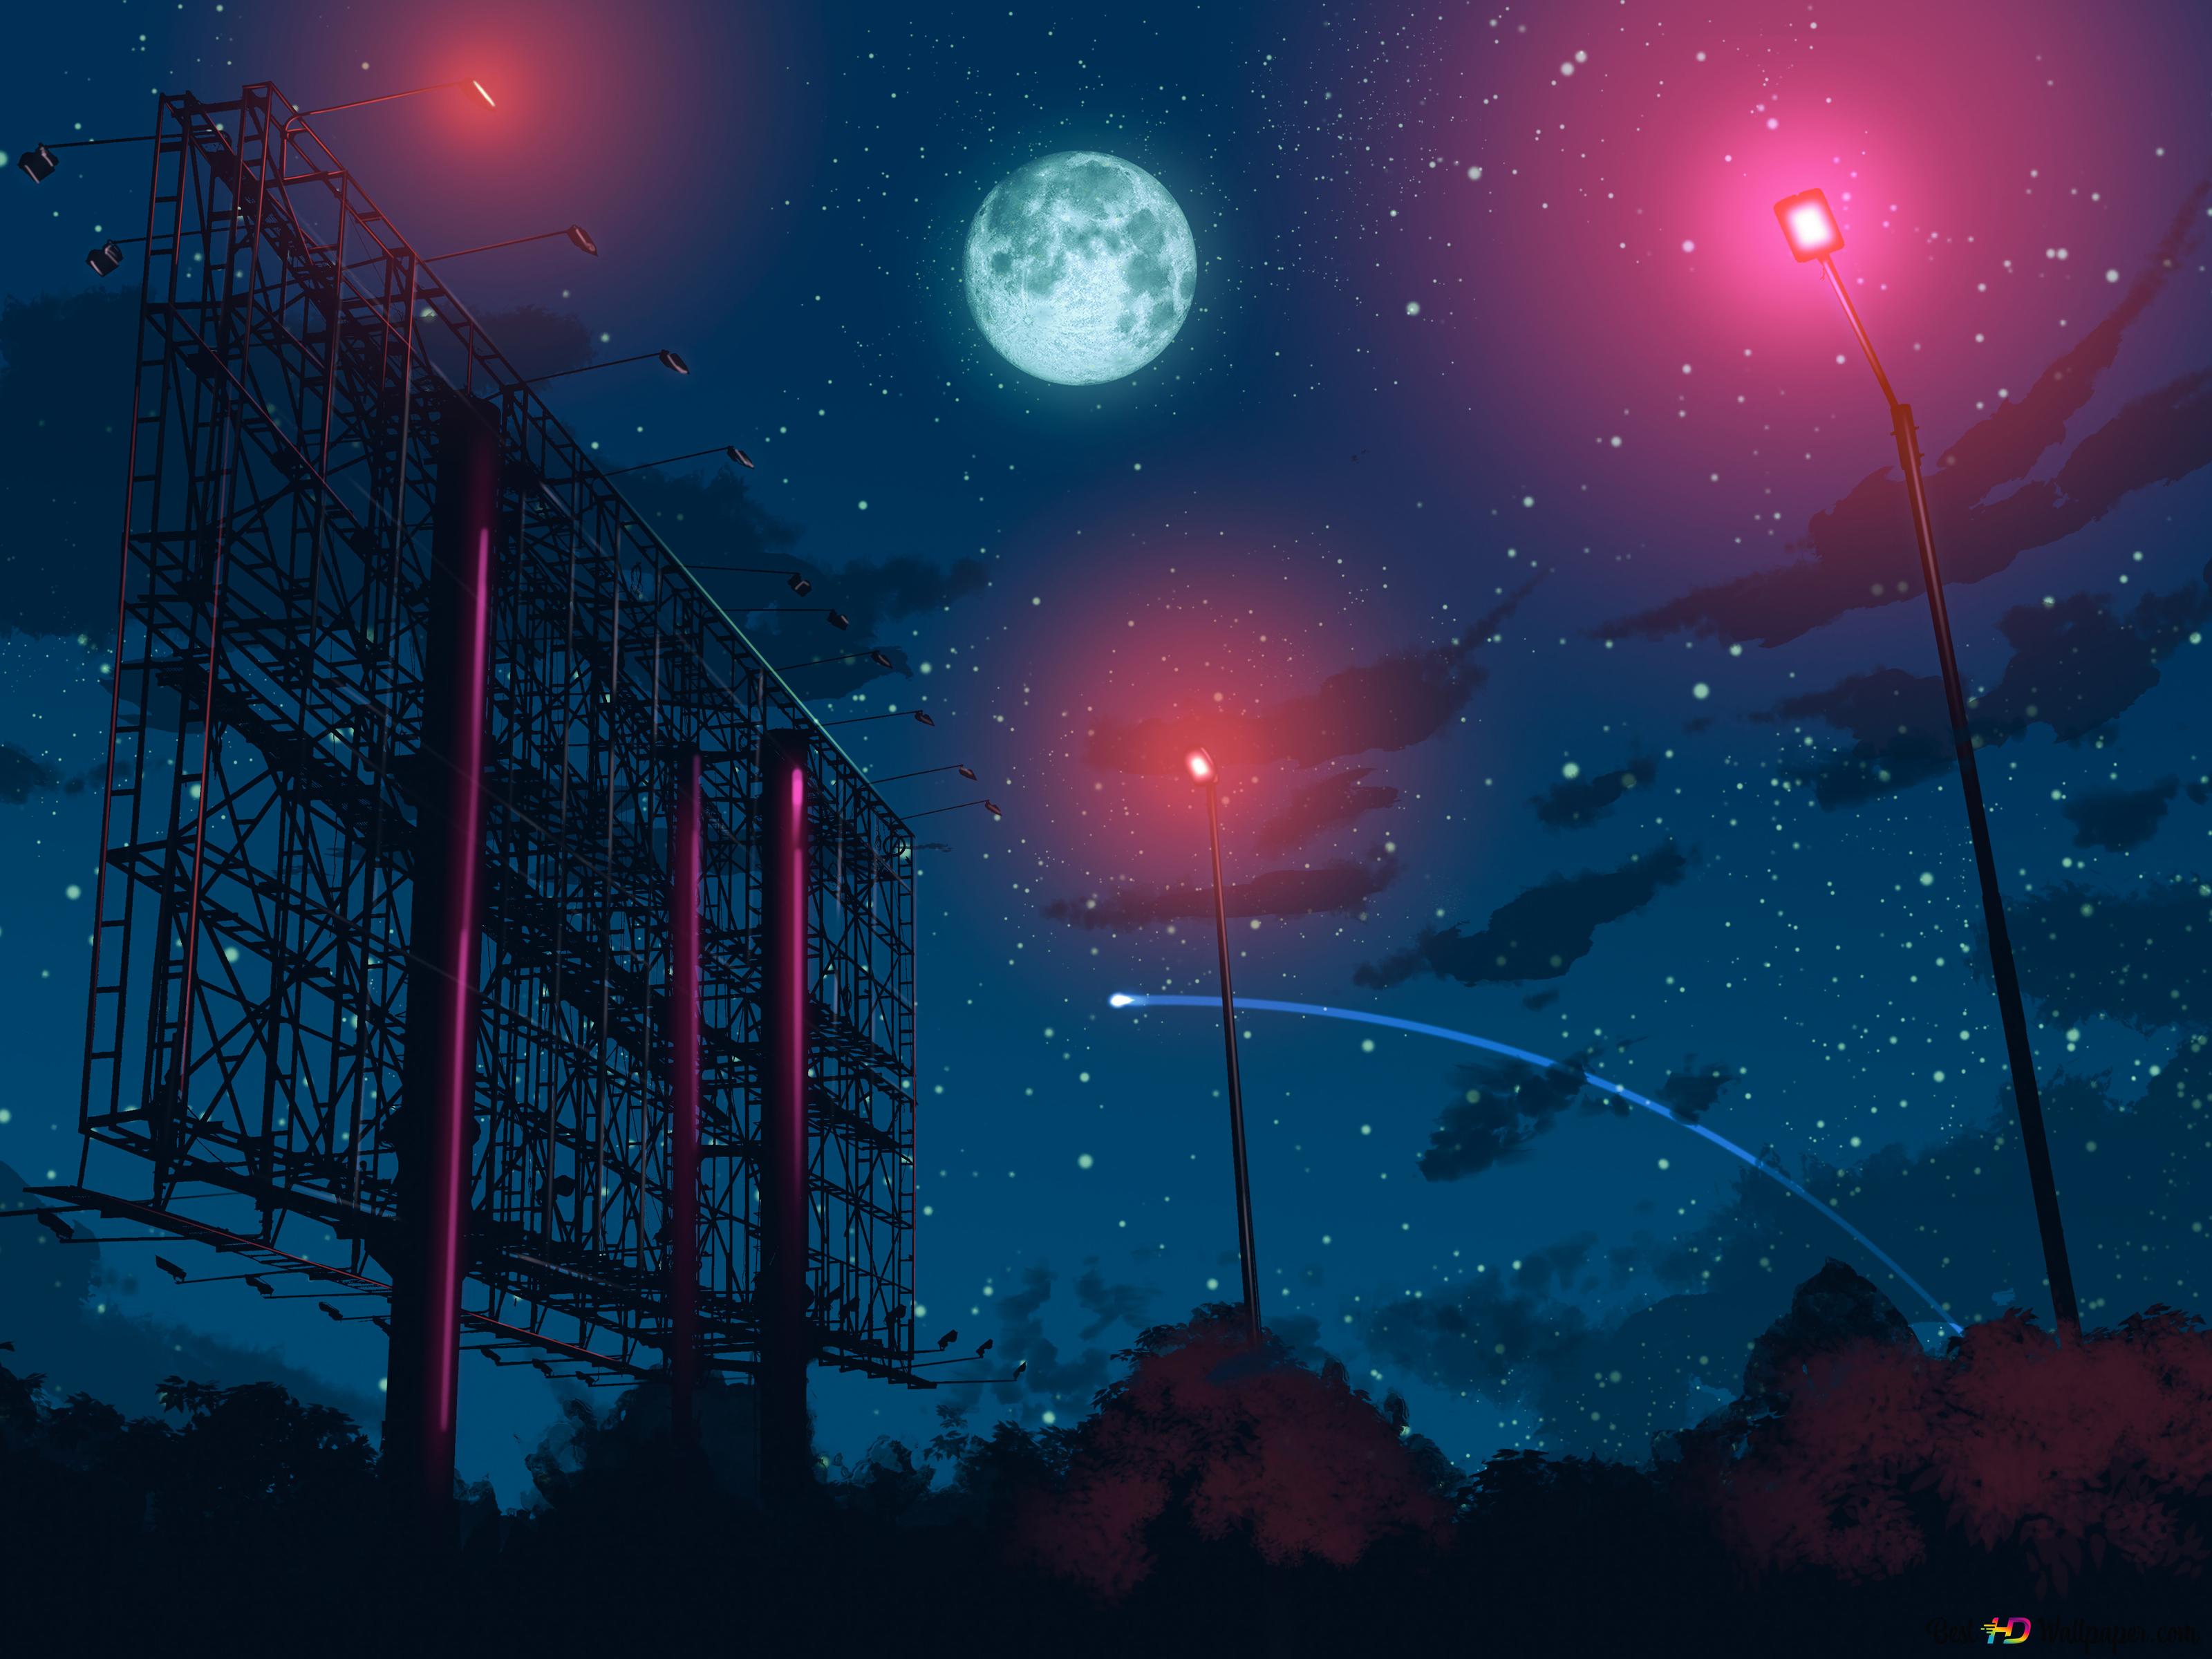 Starry Night Anime Scenery 8K wallpaper download